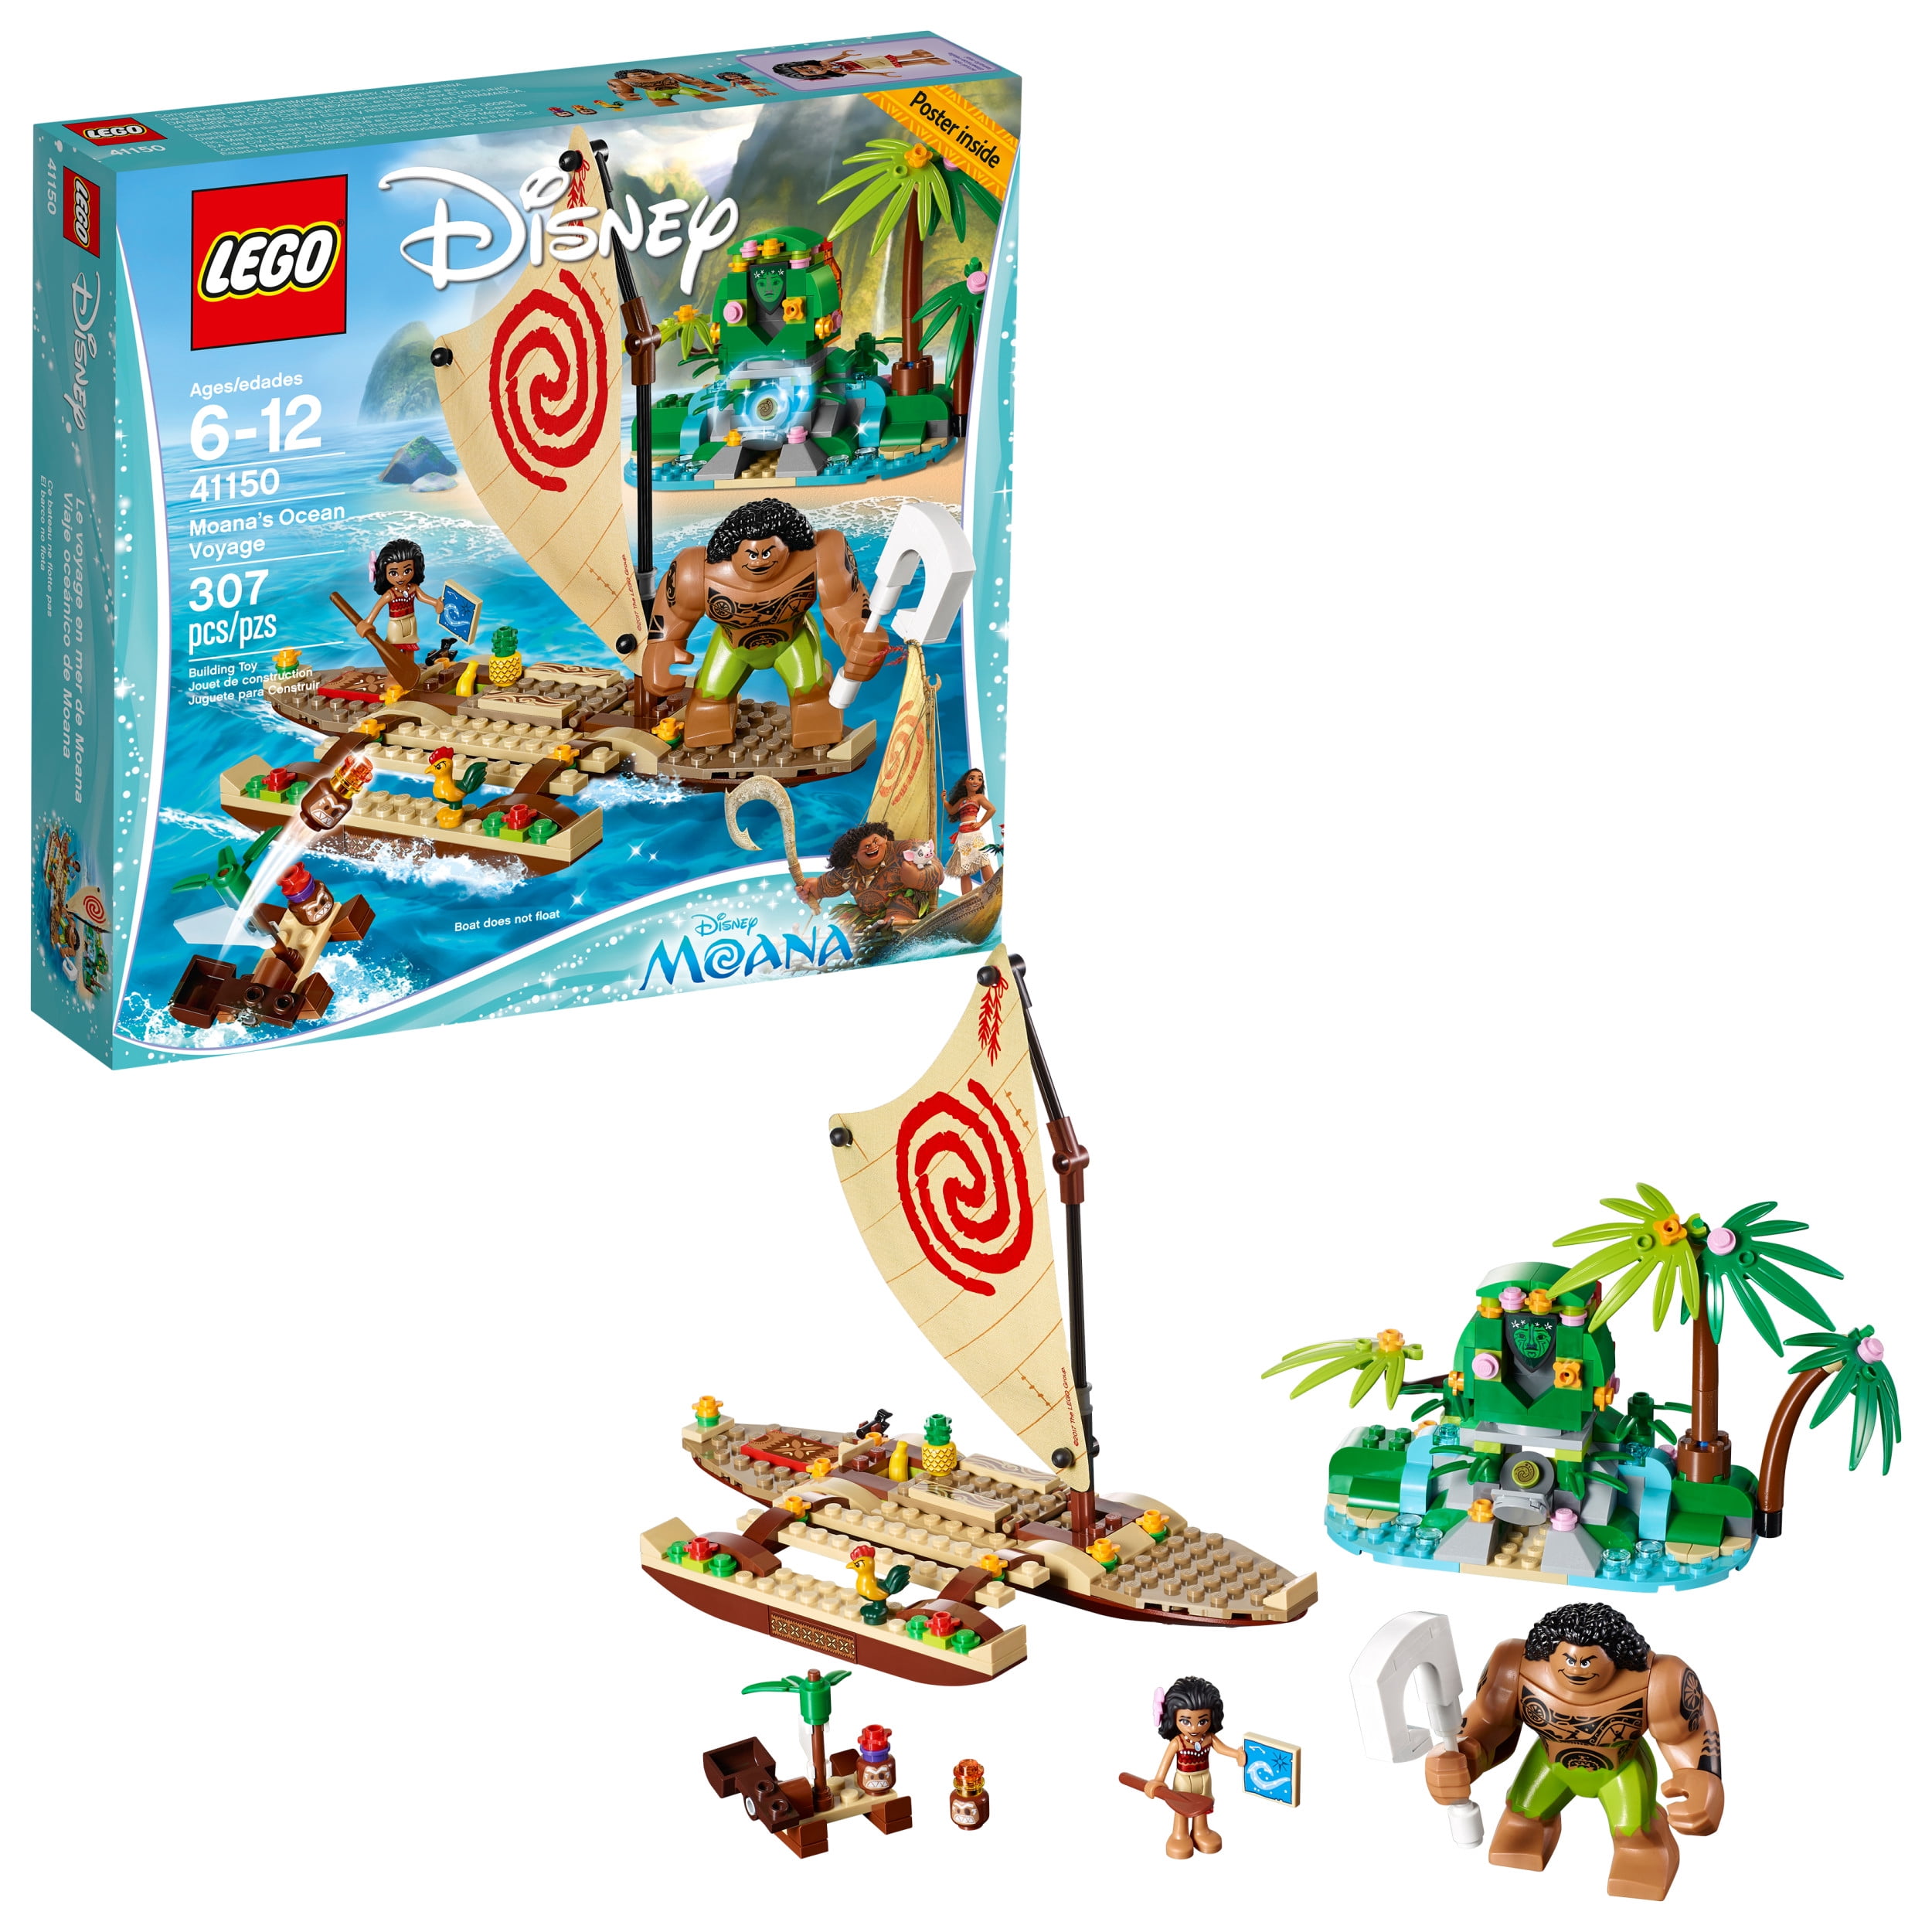 lunken bilag chap LEGO Disney Princess Moana's Ocean Voyage 41150 (307 Pieces) - Walmart.com